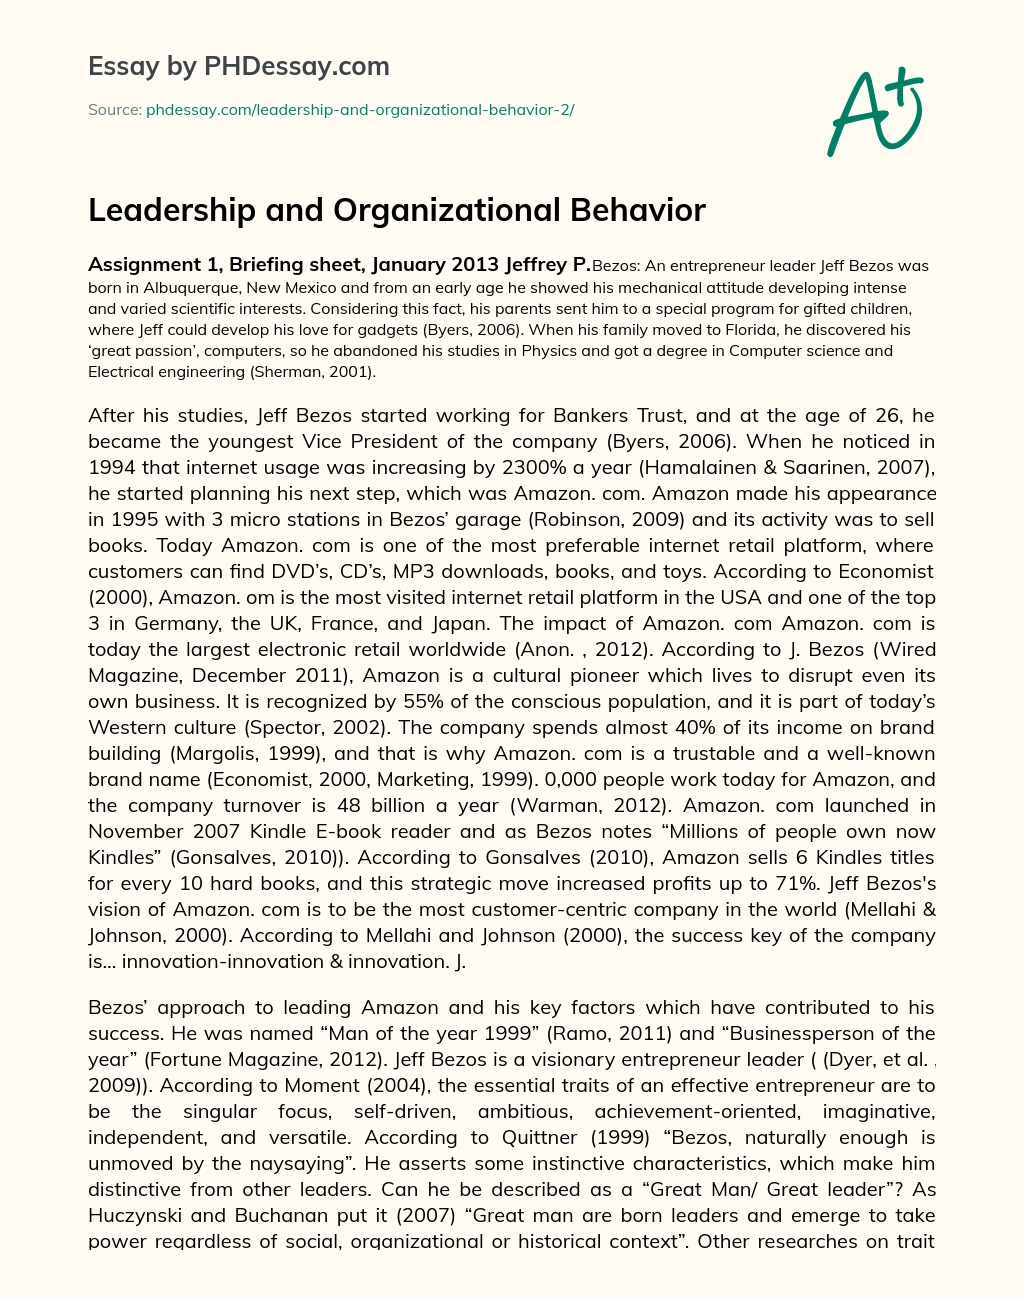 Leadership and Organizational Behavior essay